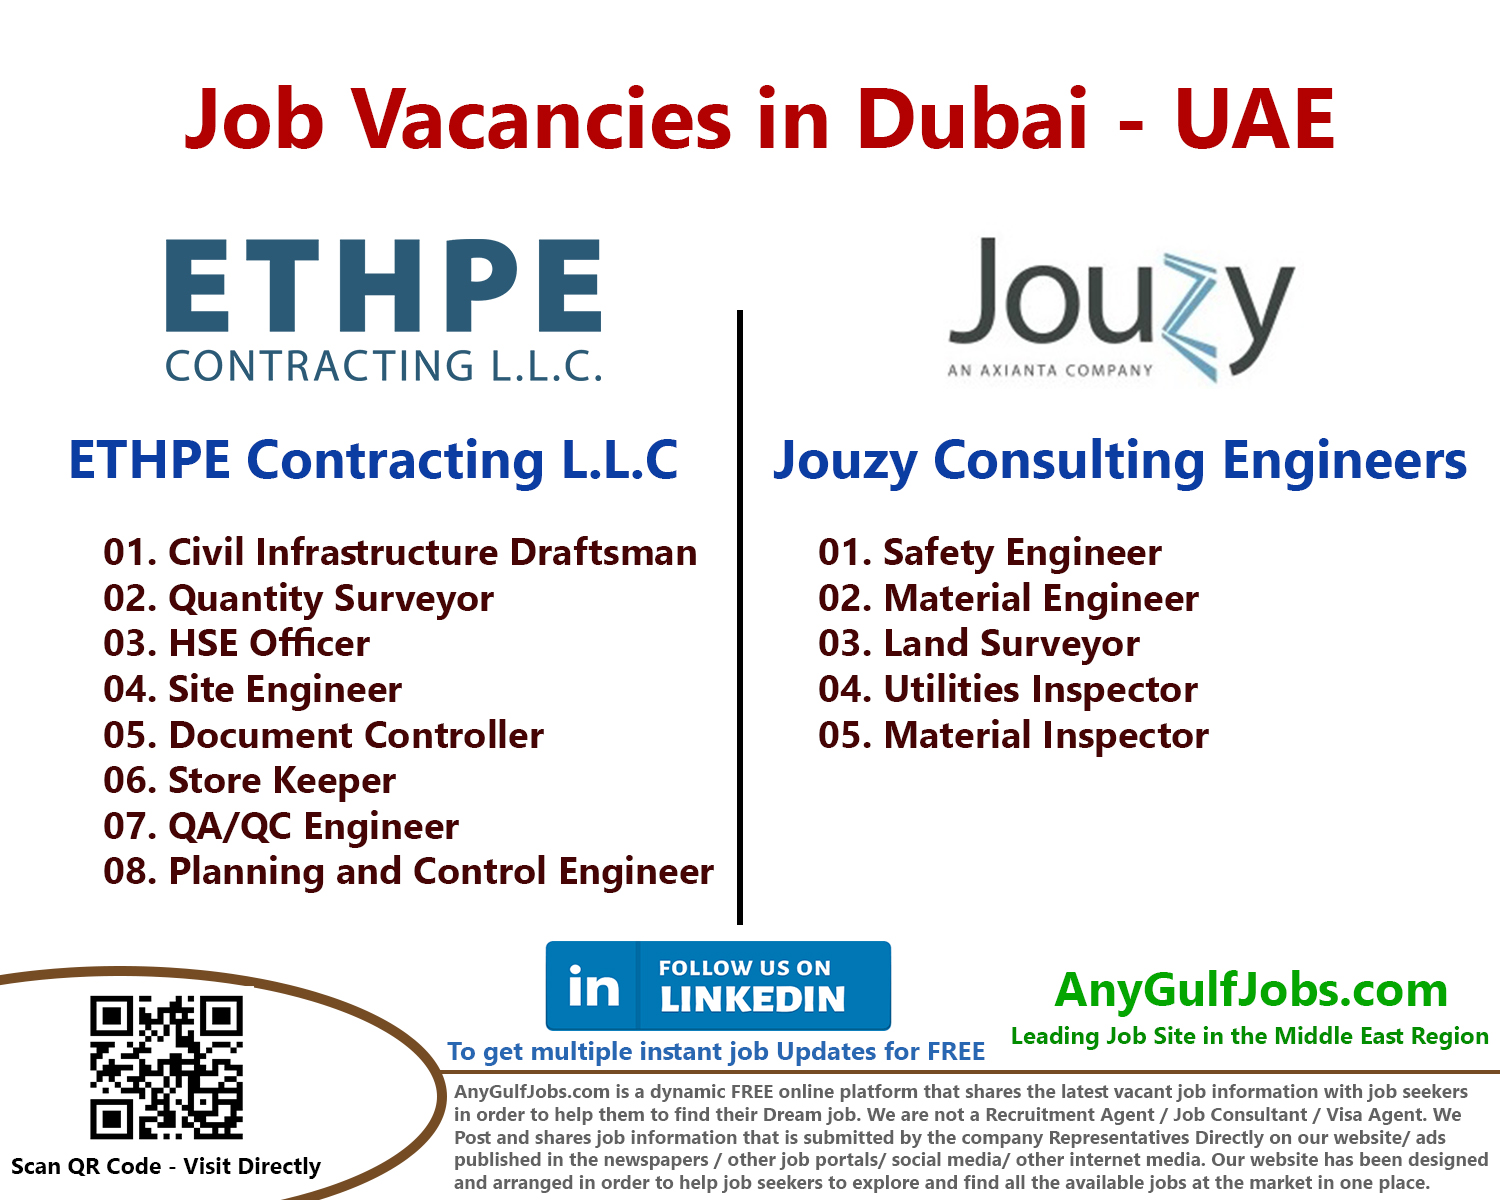 Jouzy Consulting Engineers Job Vacancies in Dubai - UAE Vacancies